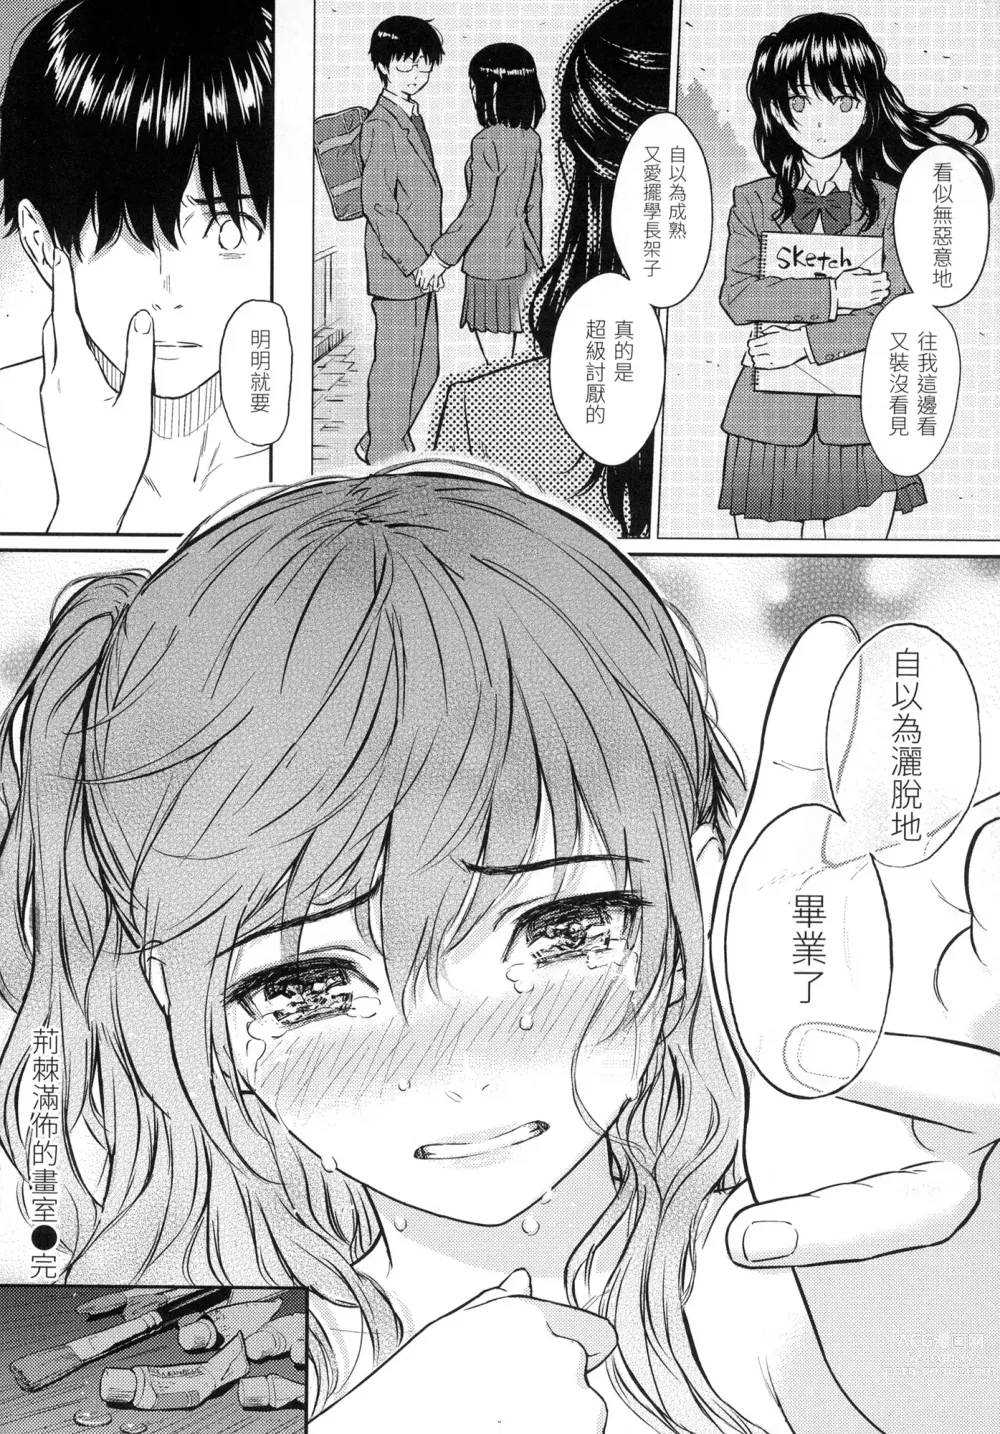 Page 209 of manga 求愛異鄉人 (decensored)